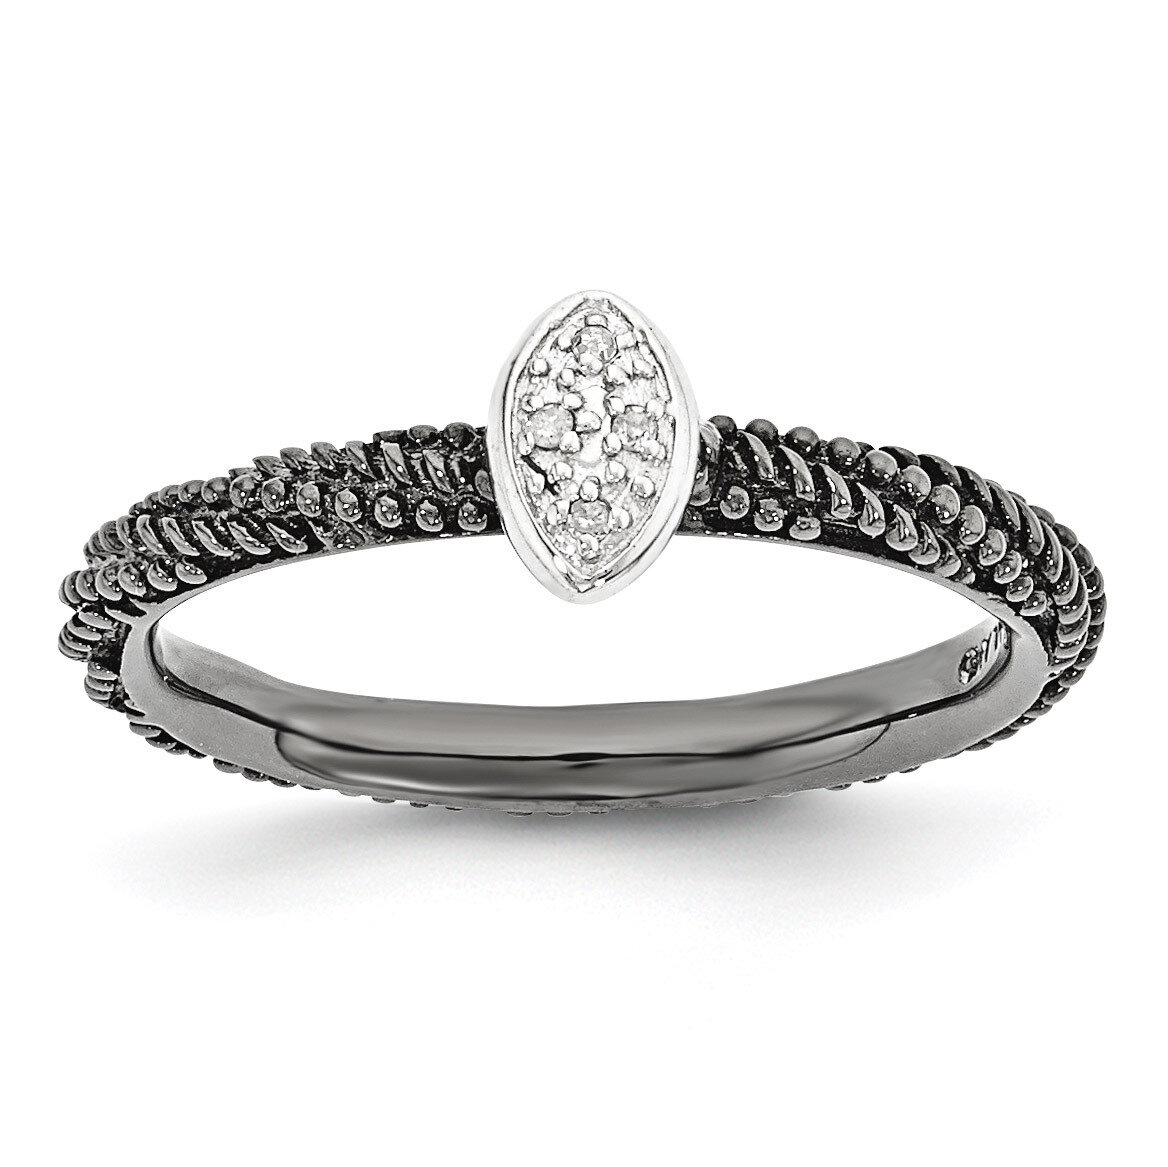 Rhodium Plated Ring Sterling Silver Diamond QSK1830